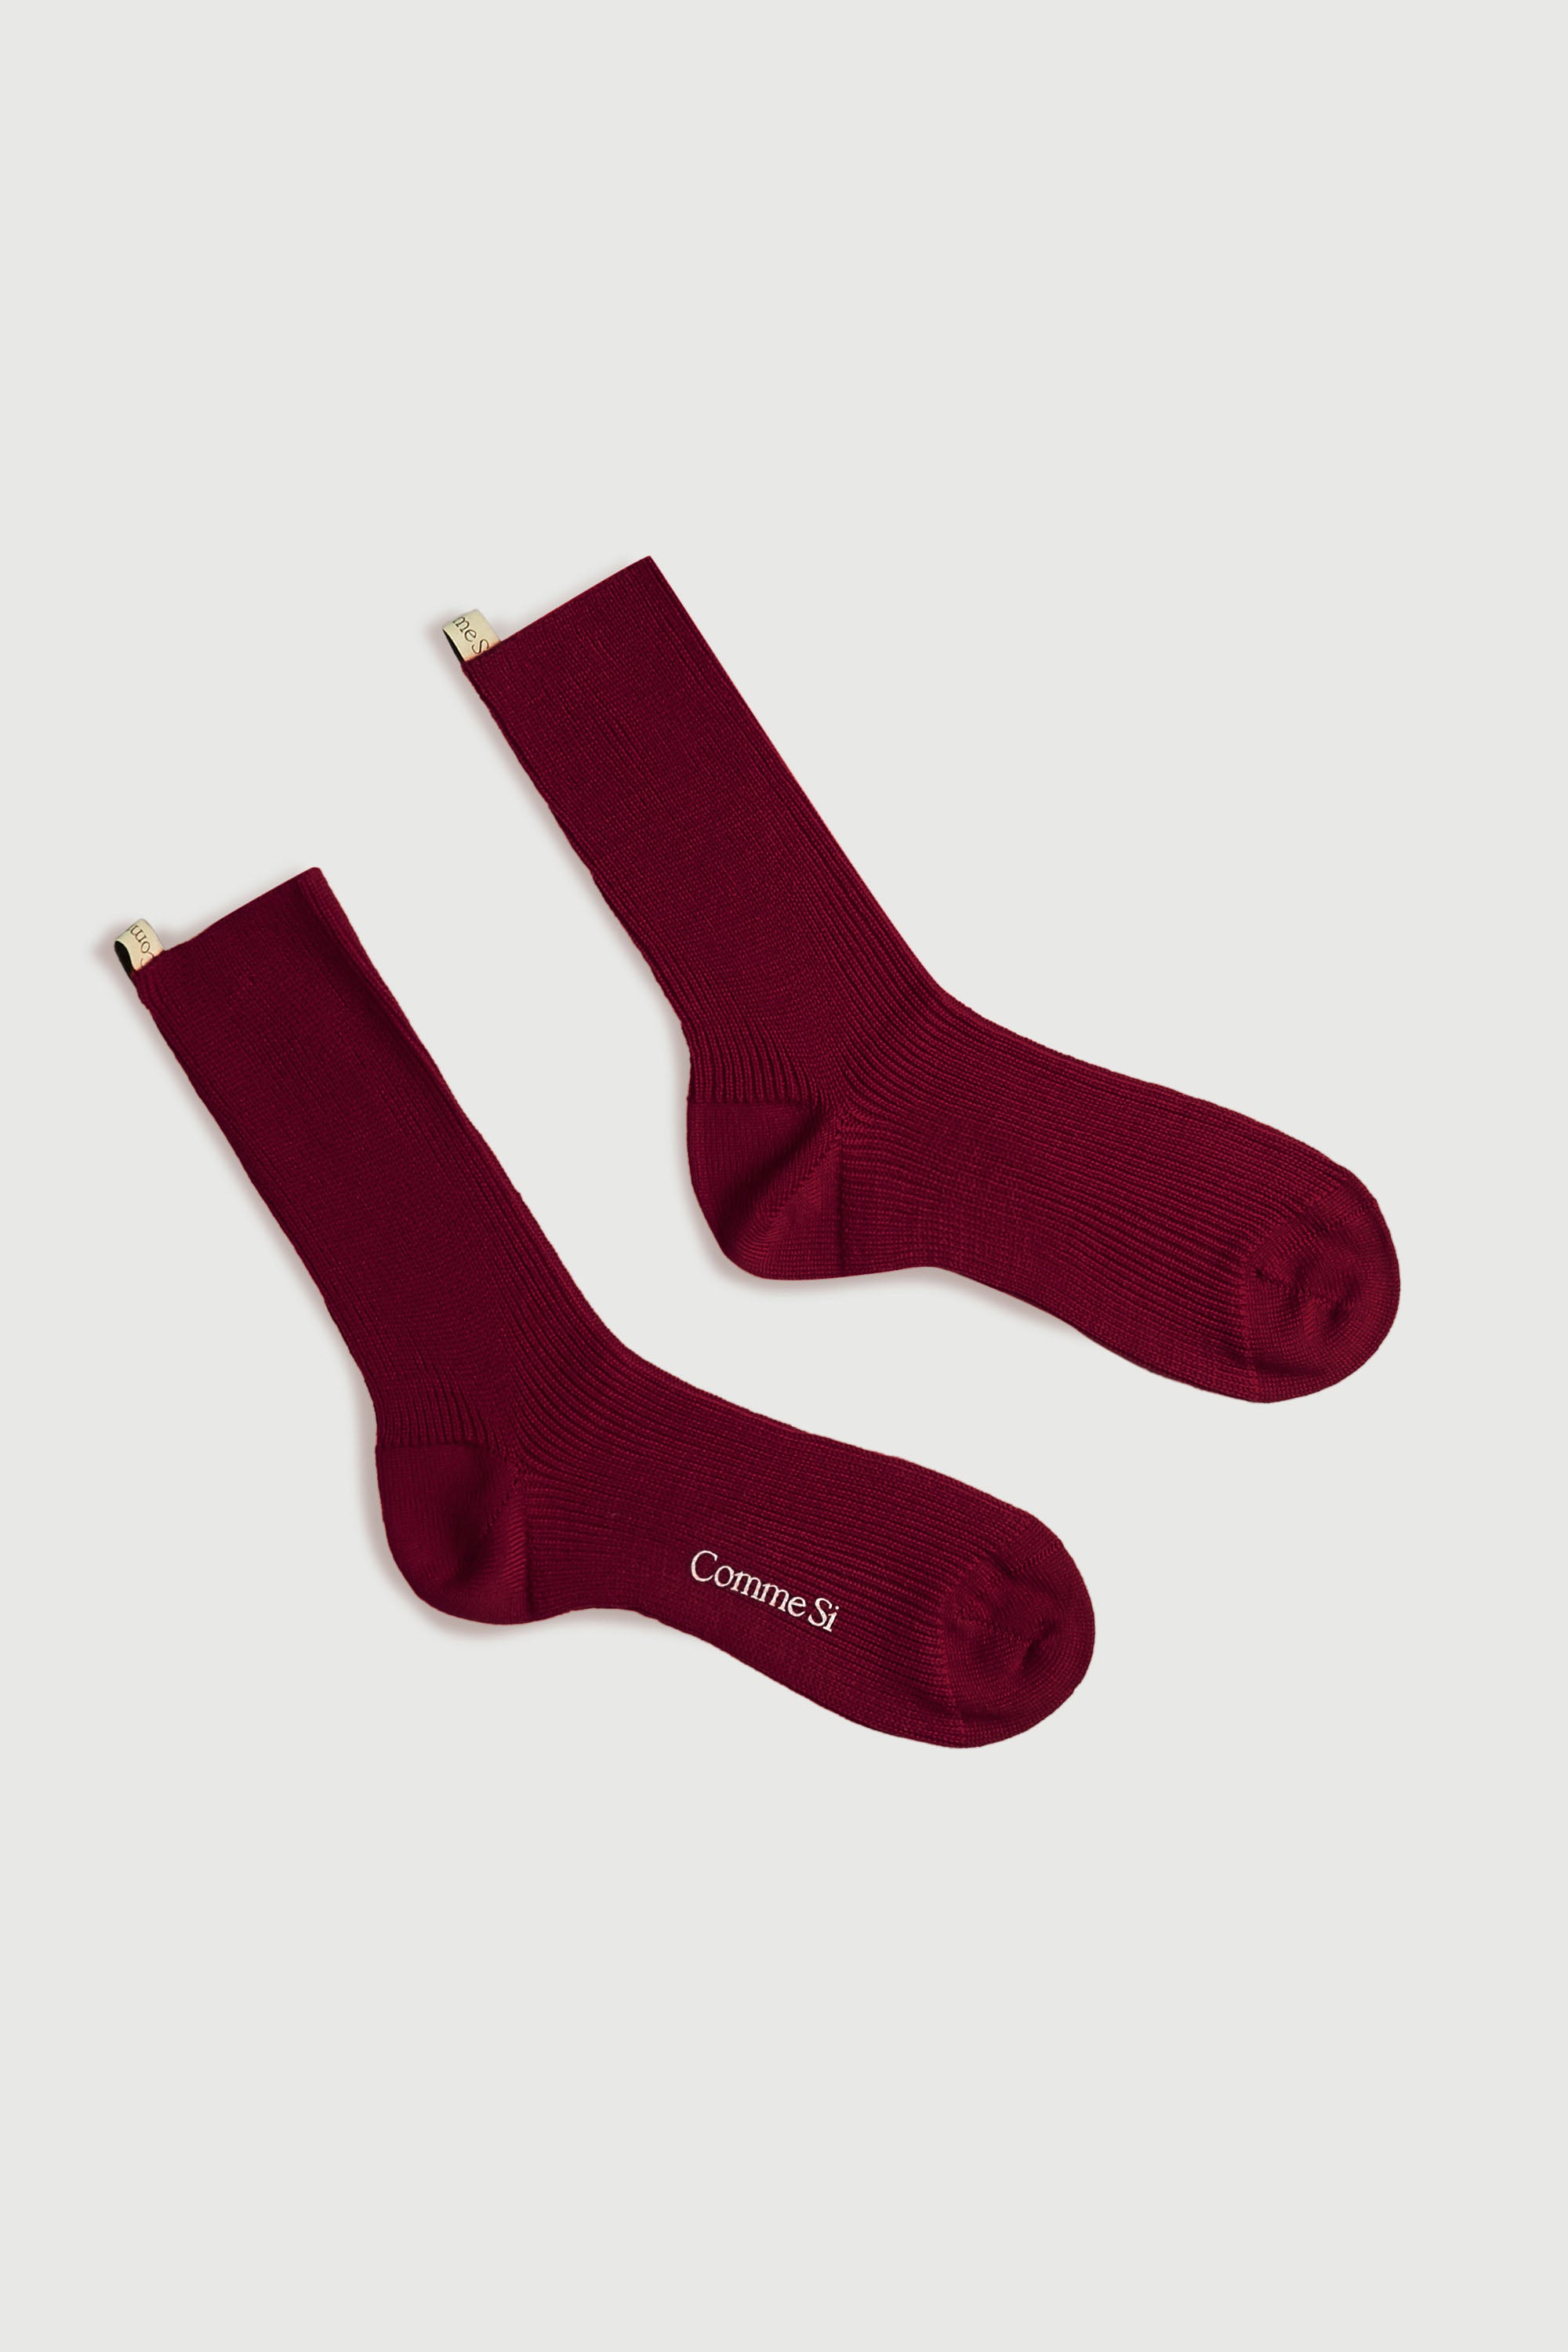 The Merino Sock in burgundy, merino wool, by Comme Si